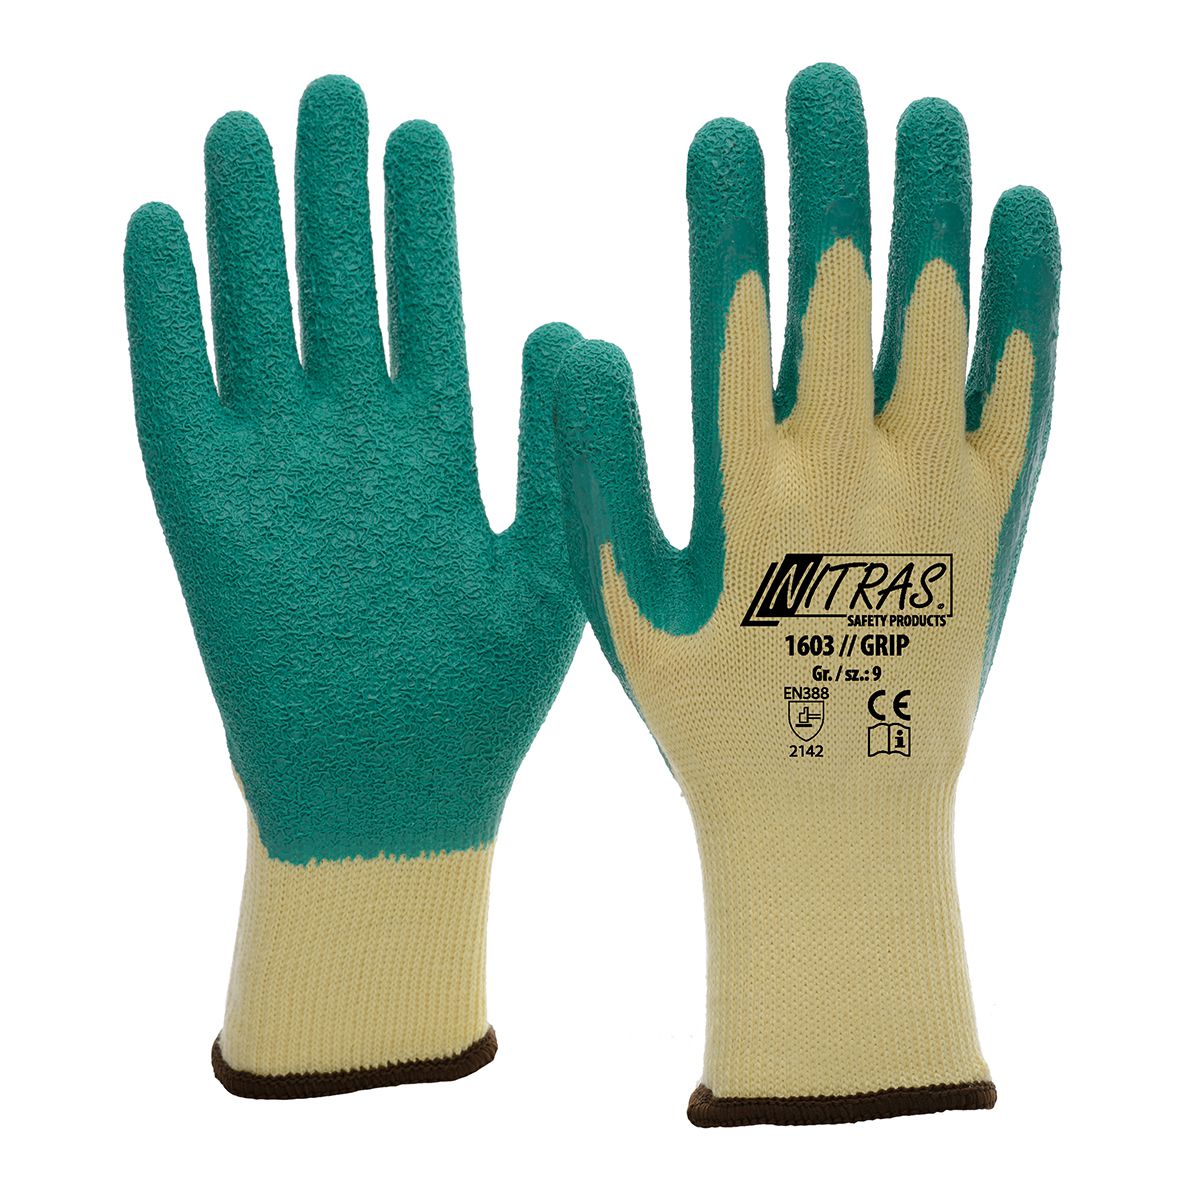 SALE: Nitras latex work glove 1603 Grip, EN 388 / EN 420, partly coated, 12 pieces, size 09/L